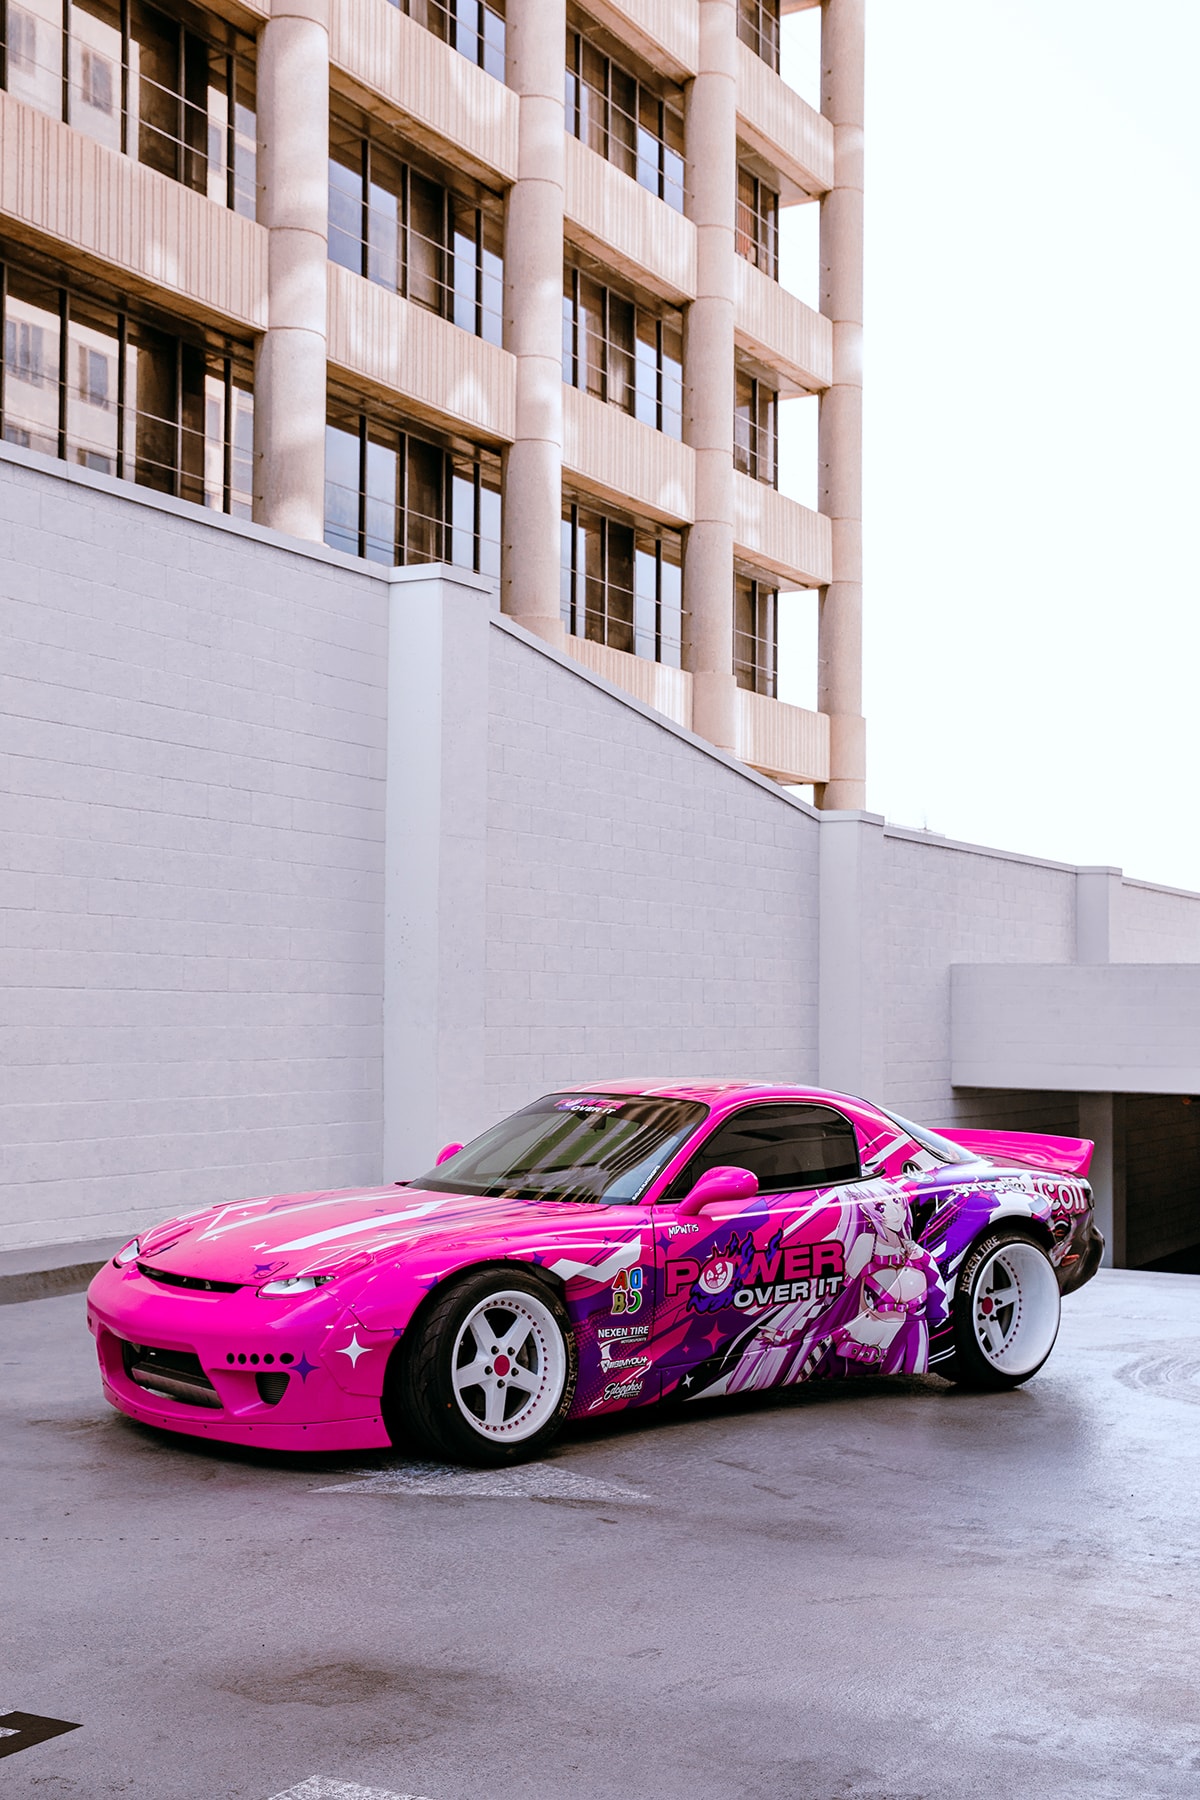 Sara Choi's 1993 Mazda RX-7 Drift Car: DRIVERS itasha anime gaming power over it youtube channel host model